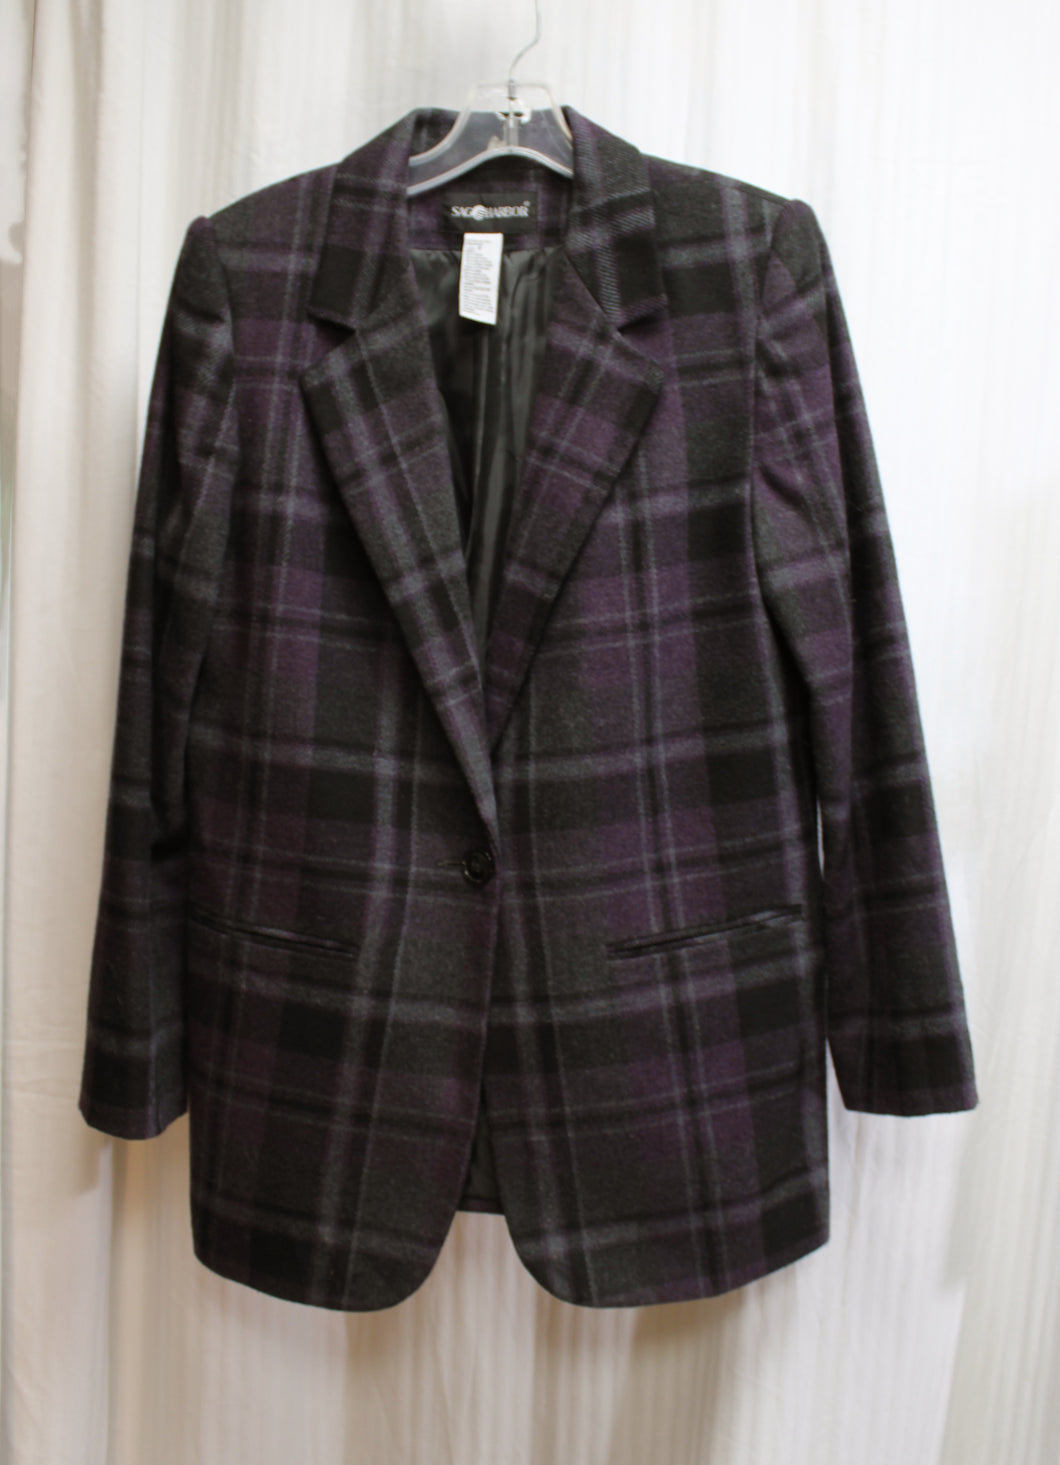 Sag Harbor - Wool Blend Purple Plaid Blazer Jacket - Size S